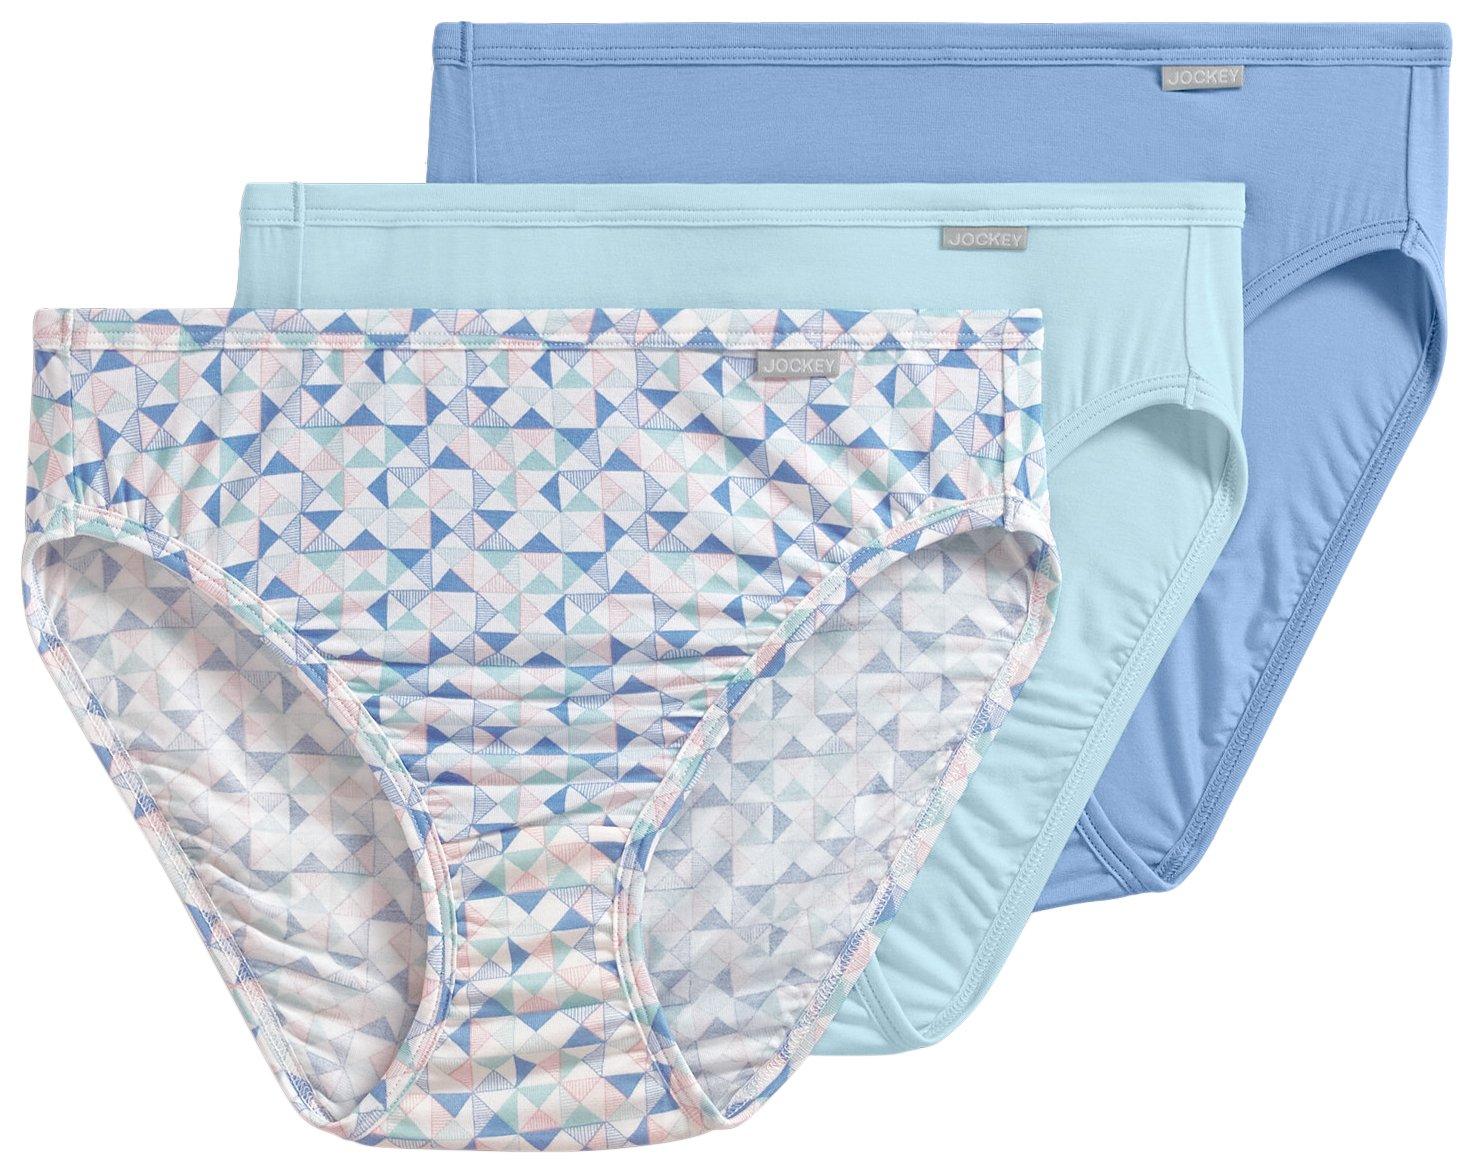 NEW 3 PK Jockey Elance Supersoft Micromodal French Cut Underwear Panties 6  7 8 $22.99 - PicClick